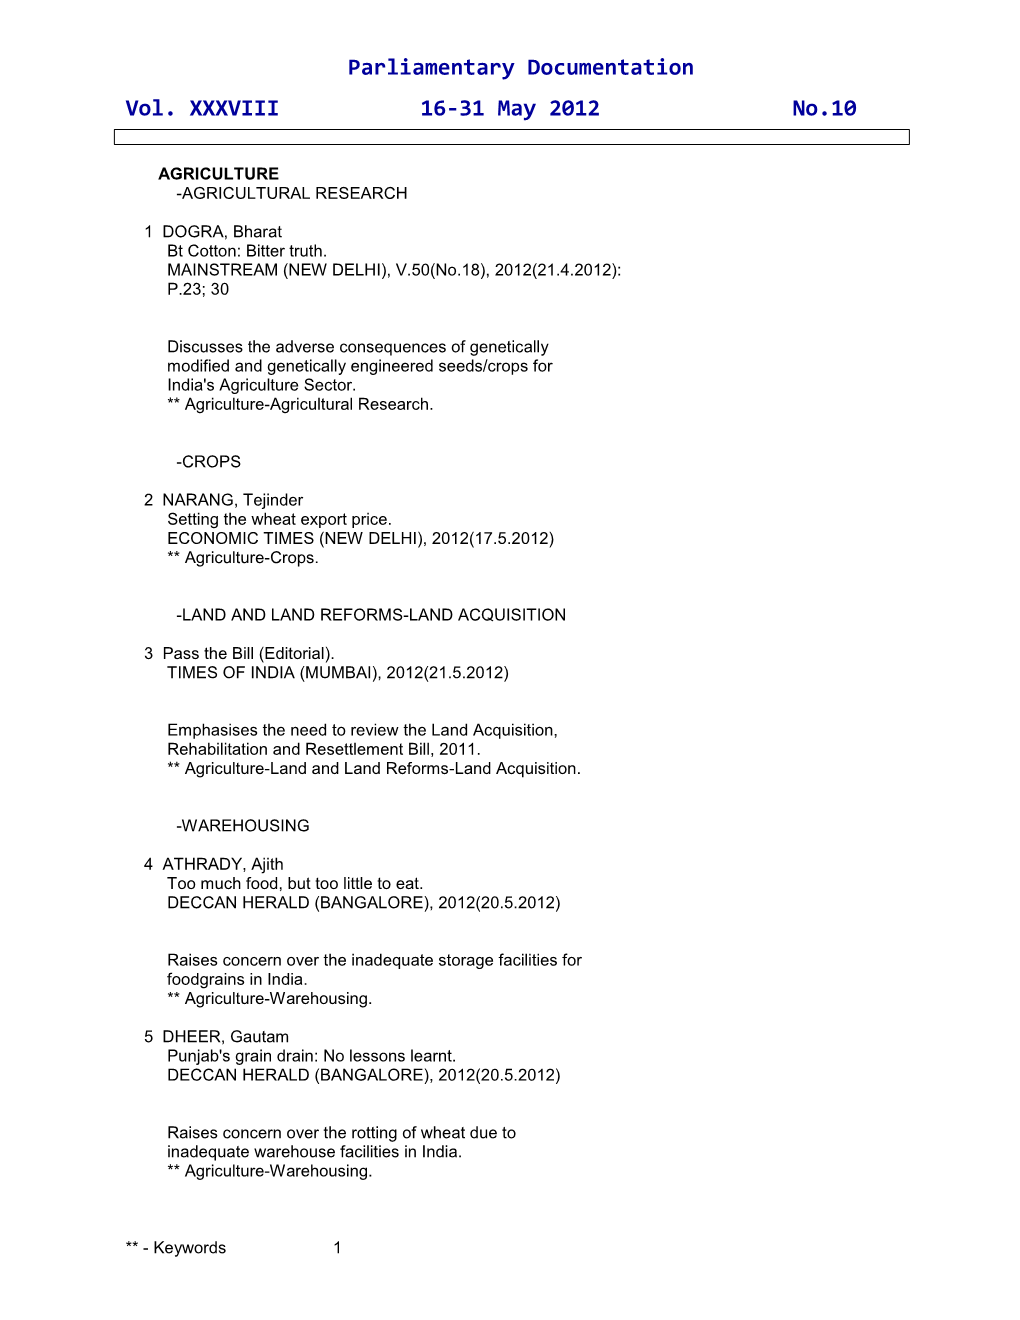 Parliamentary Documentation Vol. XXXVIII 16-31 May 2012 No.10